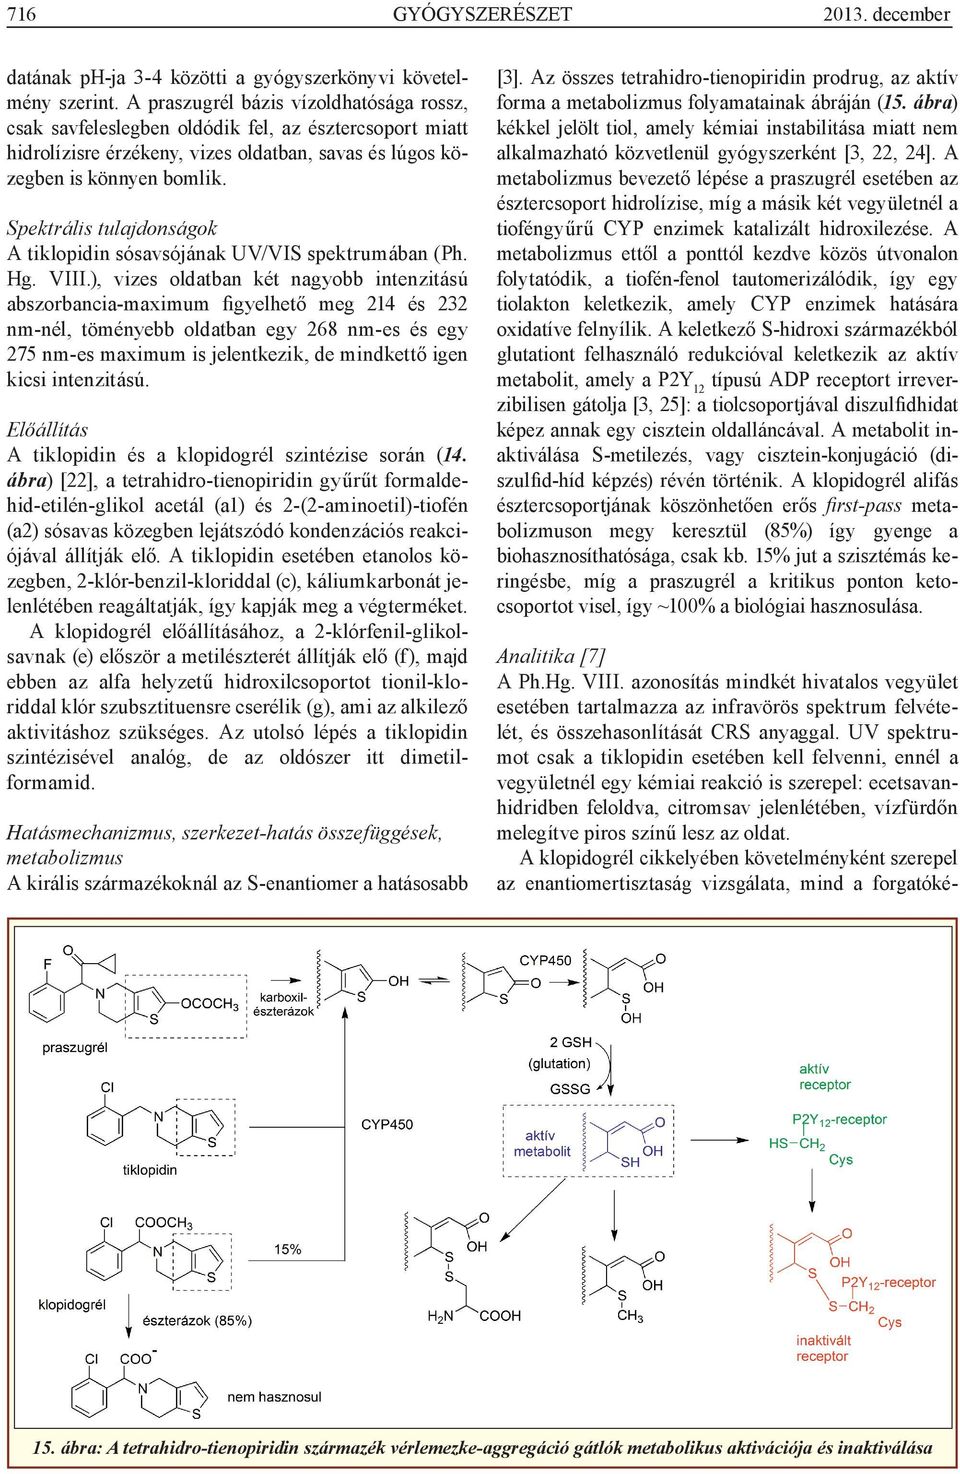 Spektrális tulajdonságok A tiklopidin sósavsójának UV/VIS spektrumában (Ph. Hg. VIII.